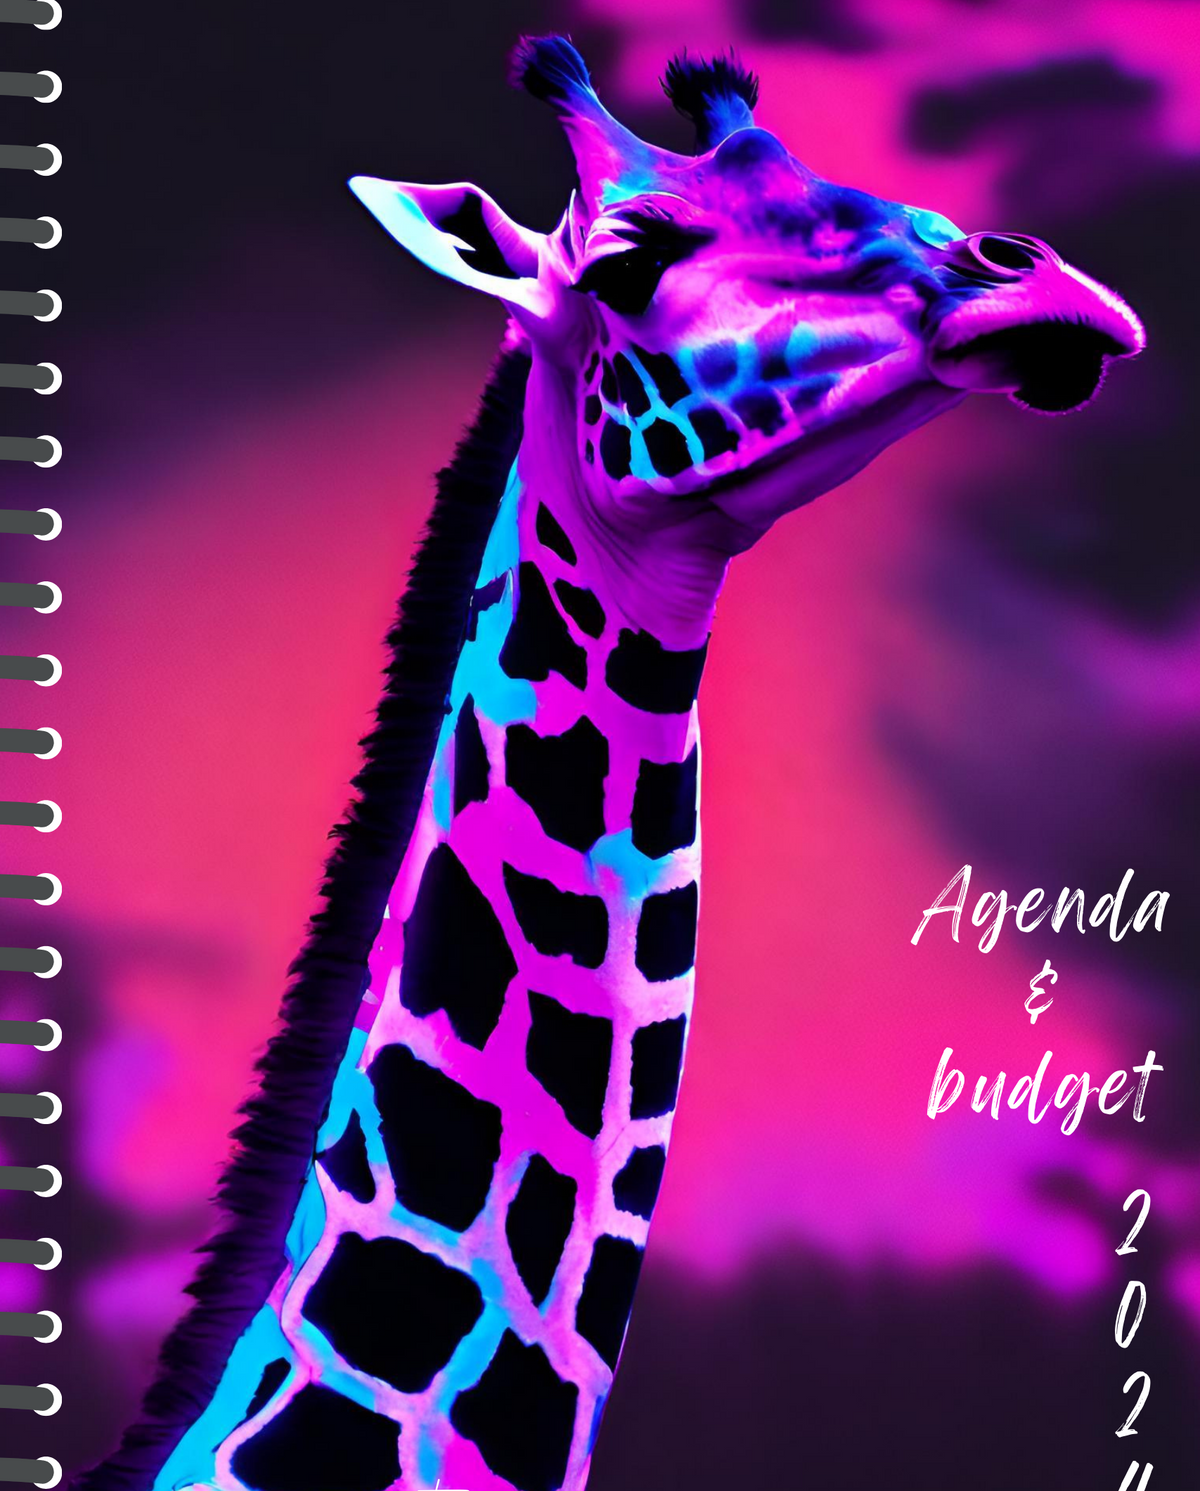 Agenda &amp; budget #156